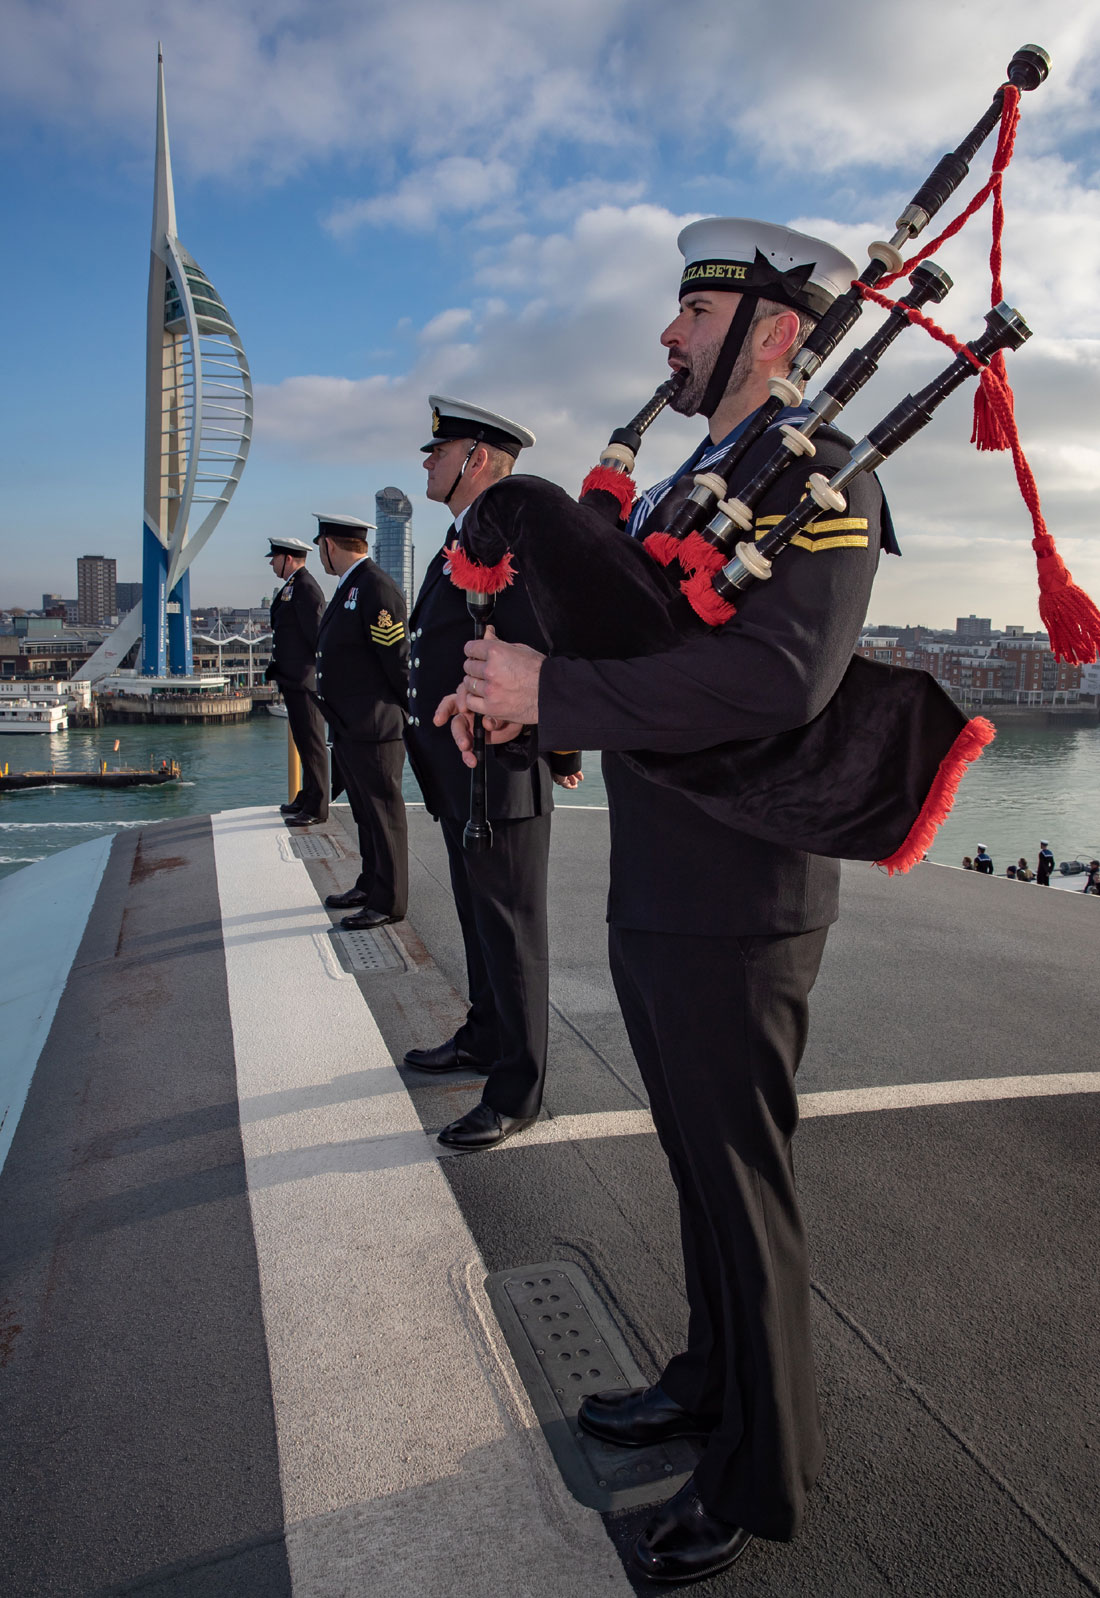 HMS Queen Elizabeth carrier strike group returns home from jet trials